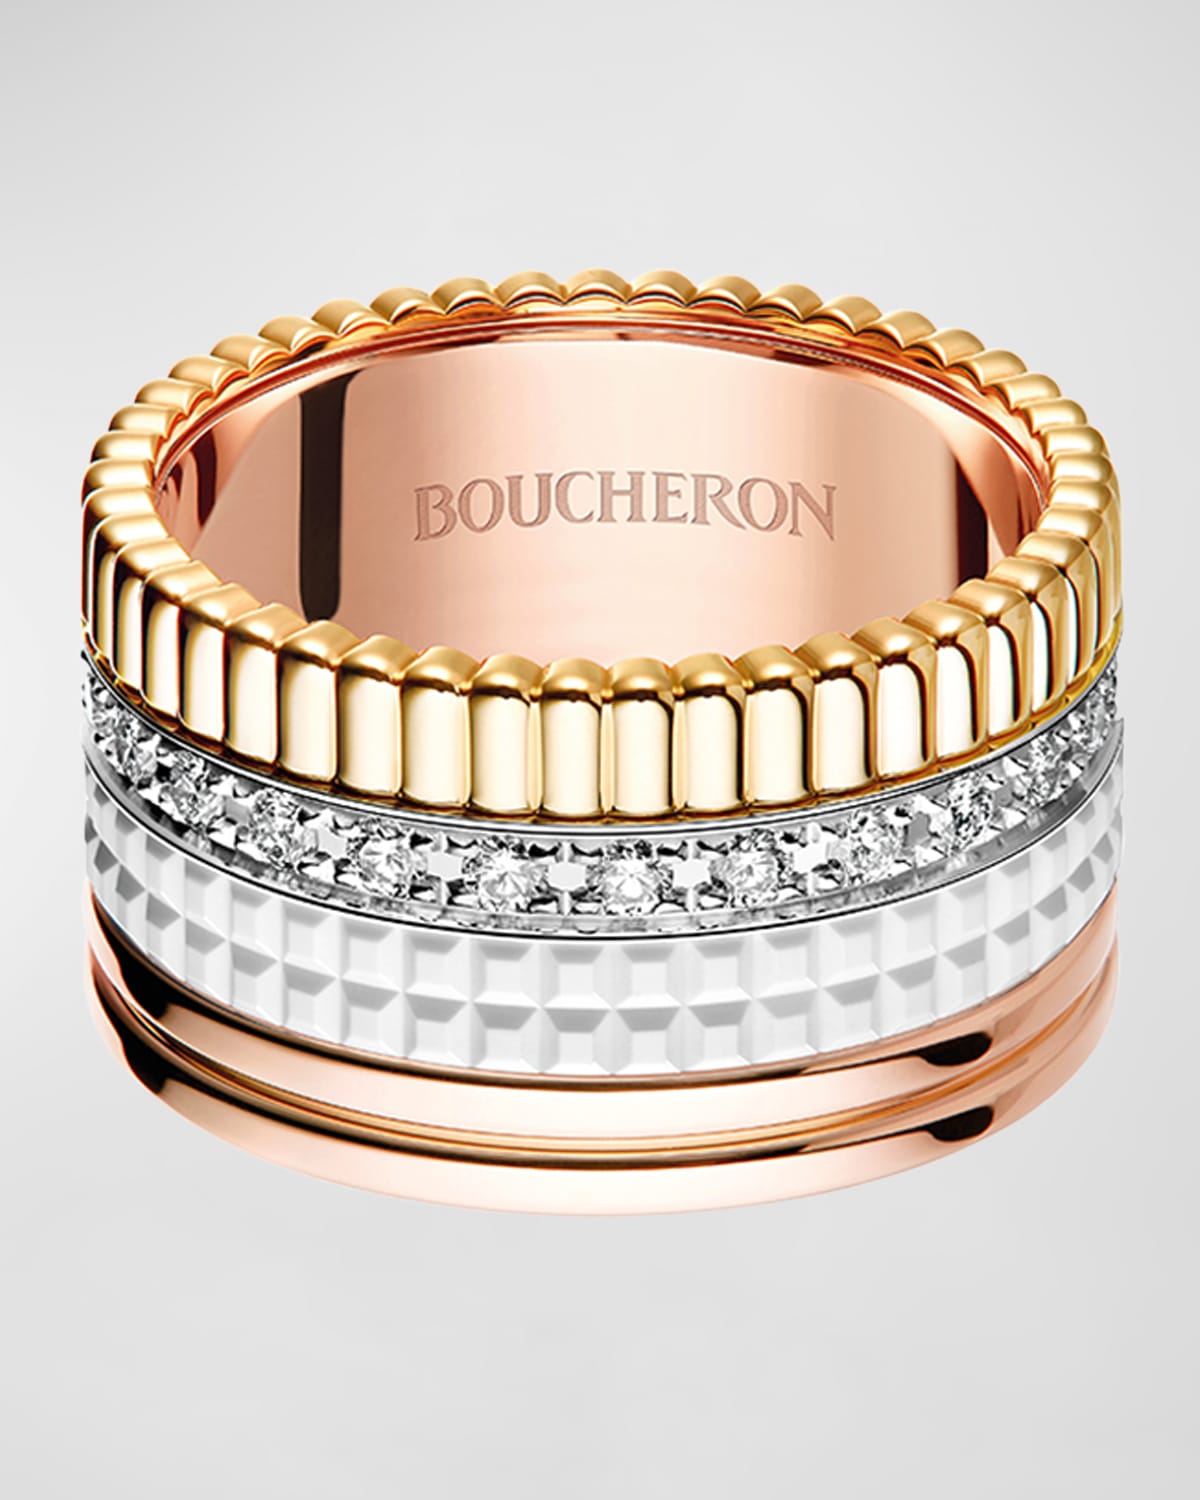 Quatre Large 18K Gold & White Ceramic Ring with Diamonds, Size 54